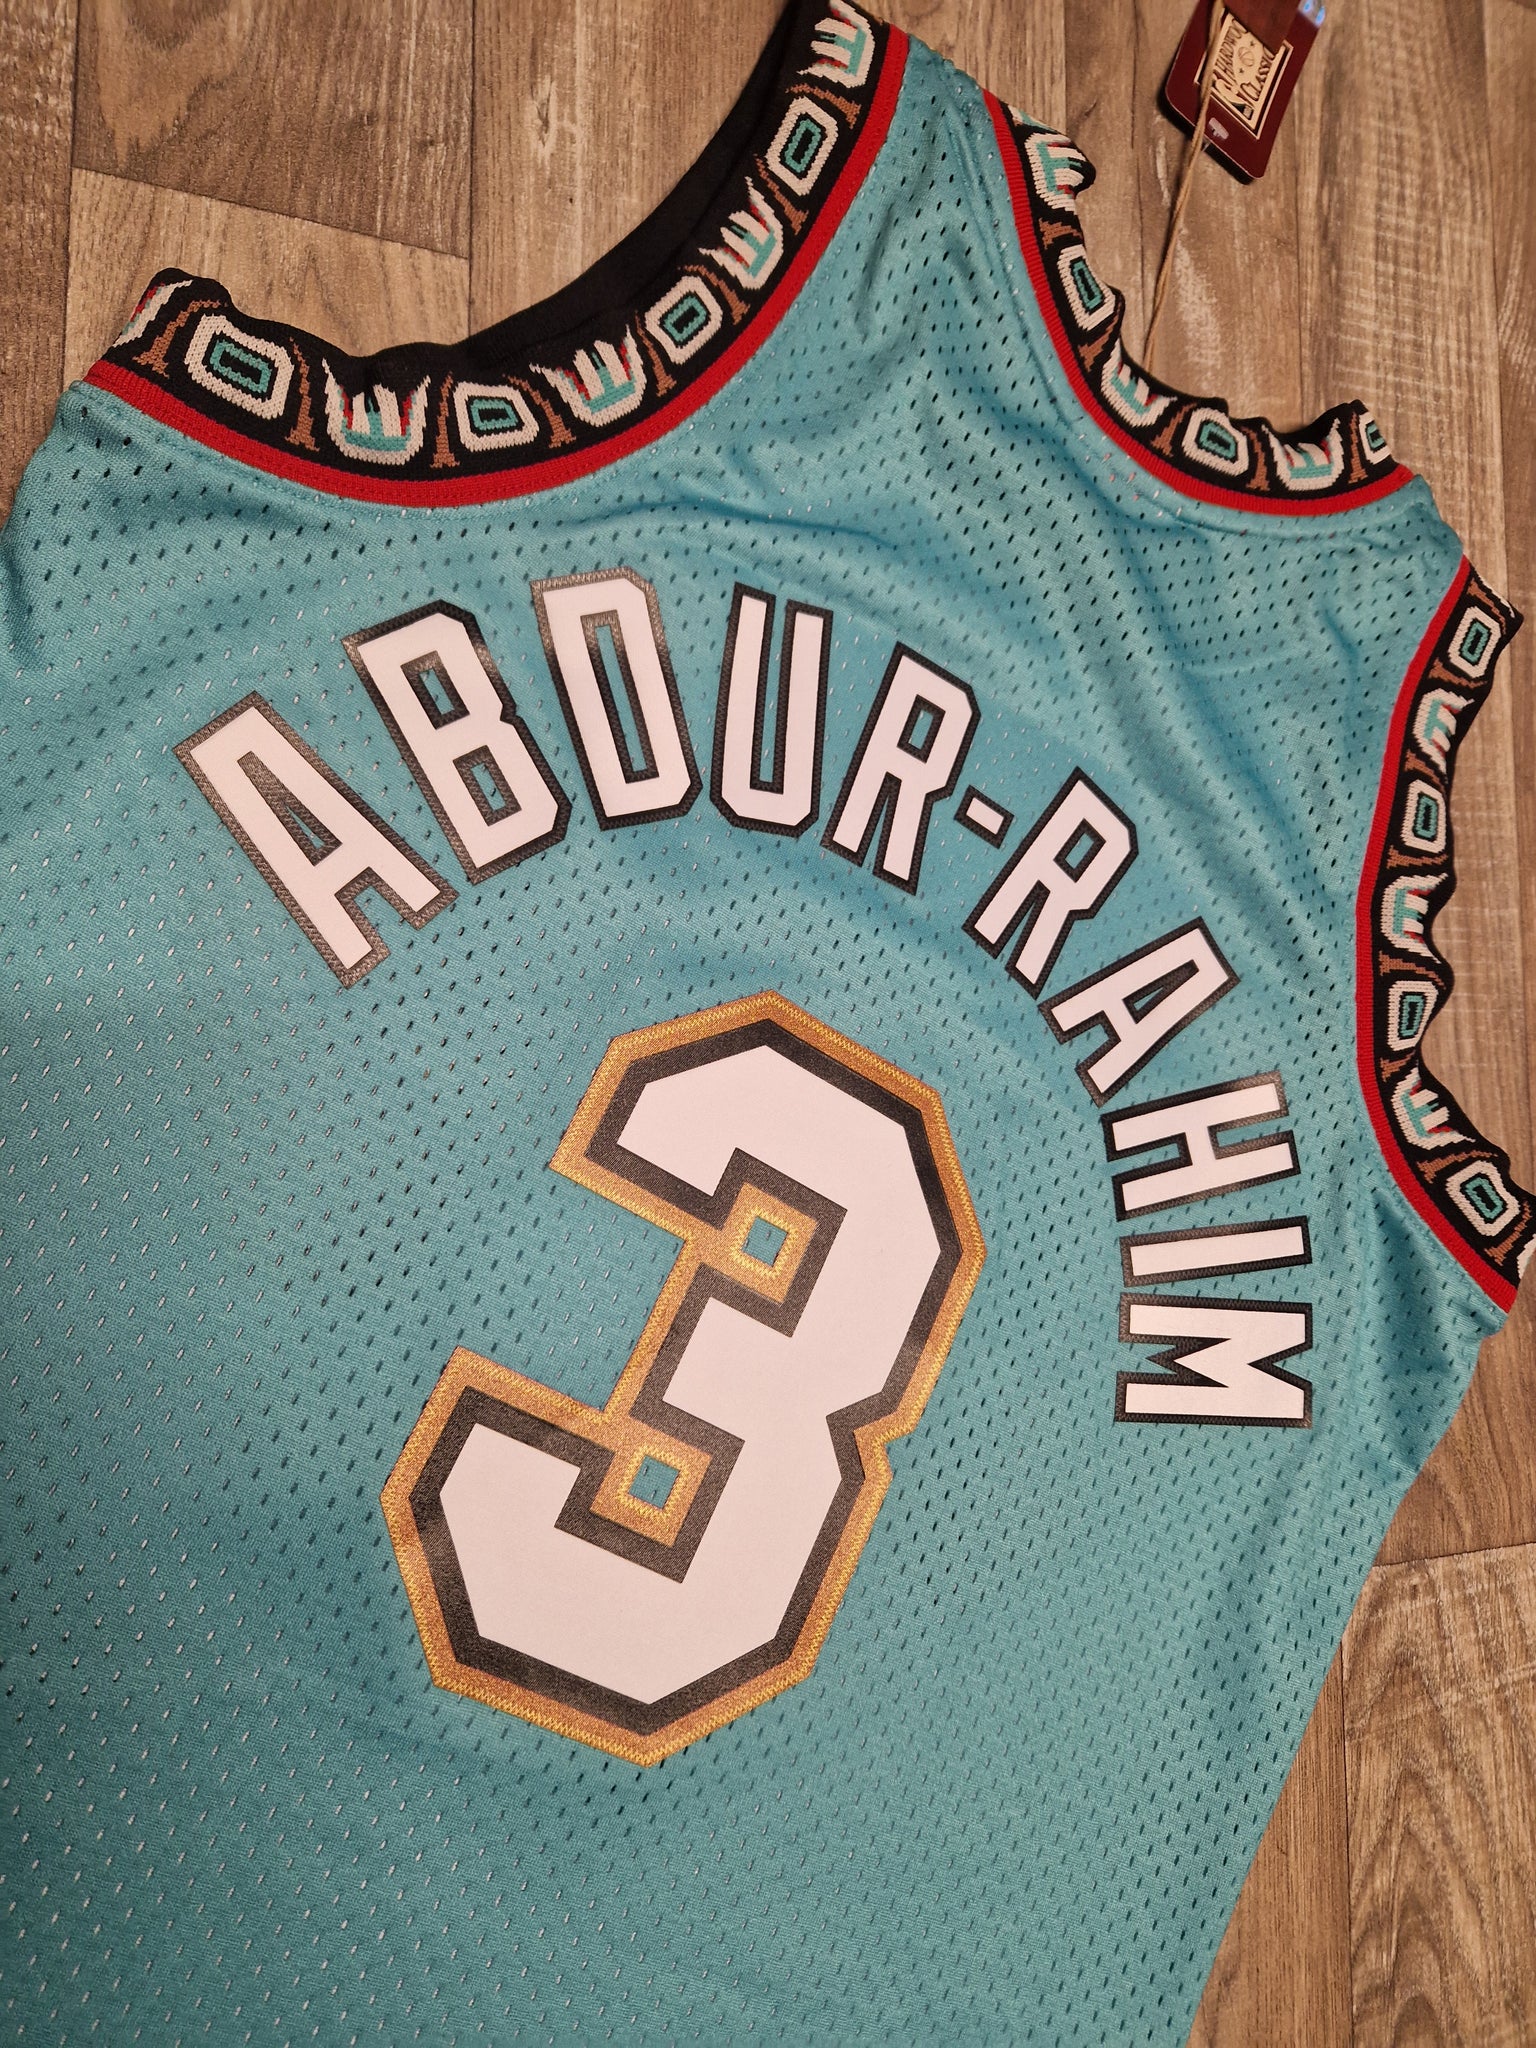 Authentic Shareef Abdur-Rahim Vancouver Grizzlies 1996-97 Jersey